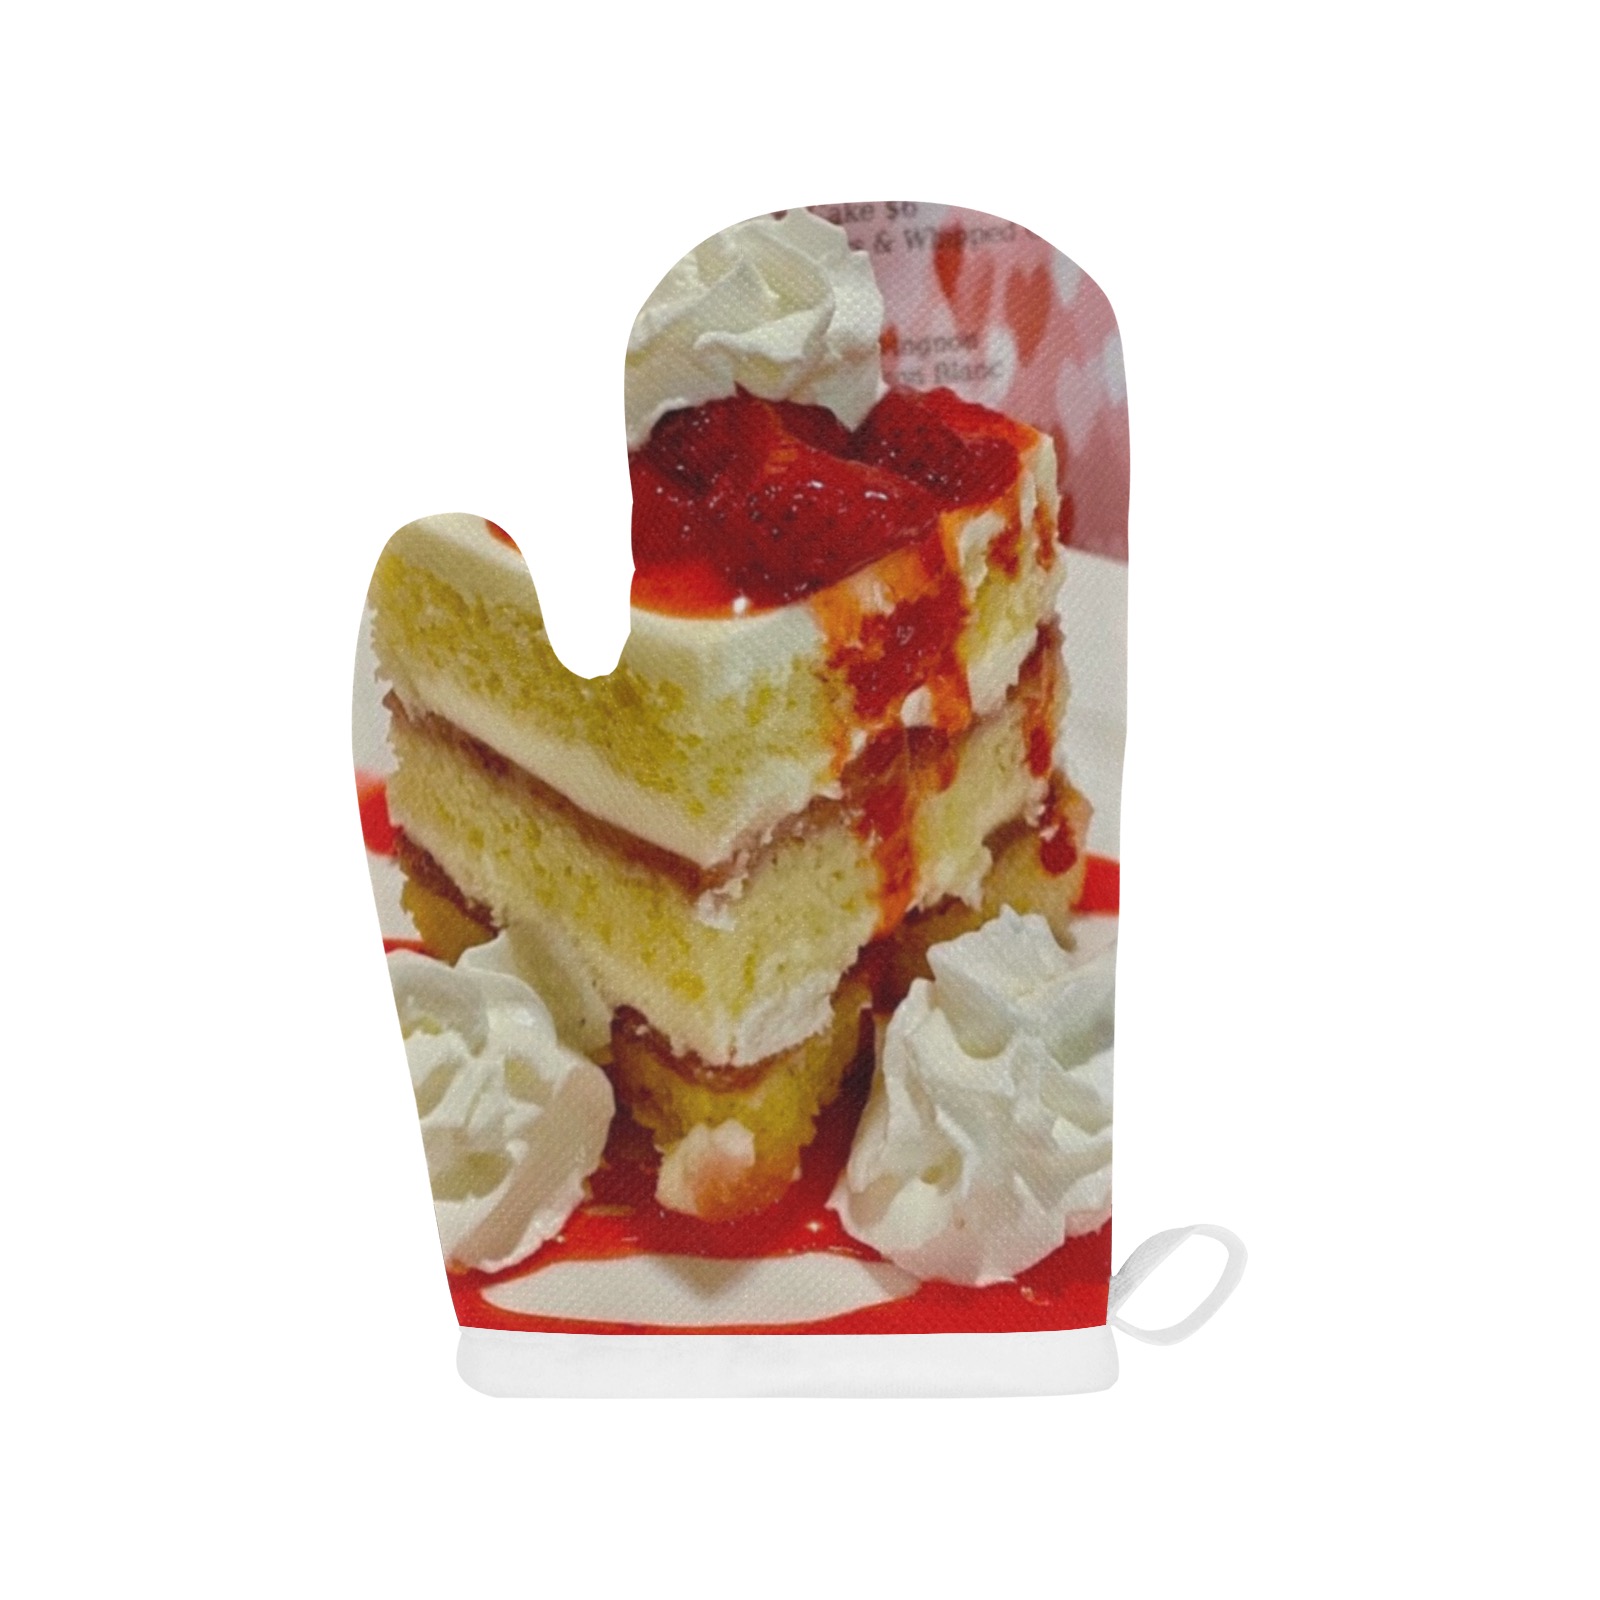 Strawberry Short cake Linen Oven Mitt (One Piece)